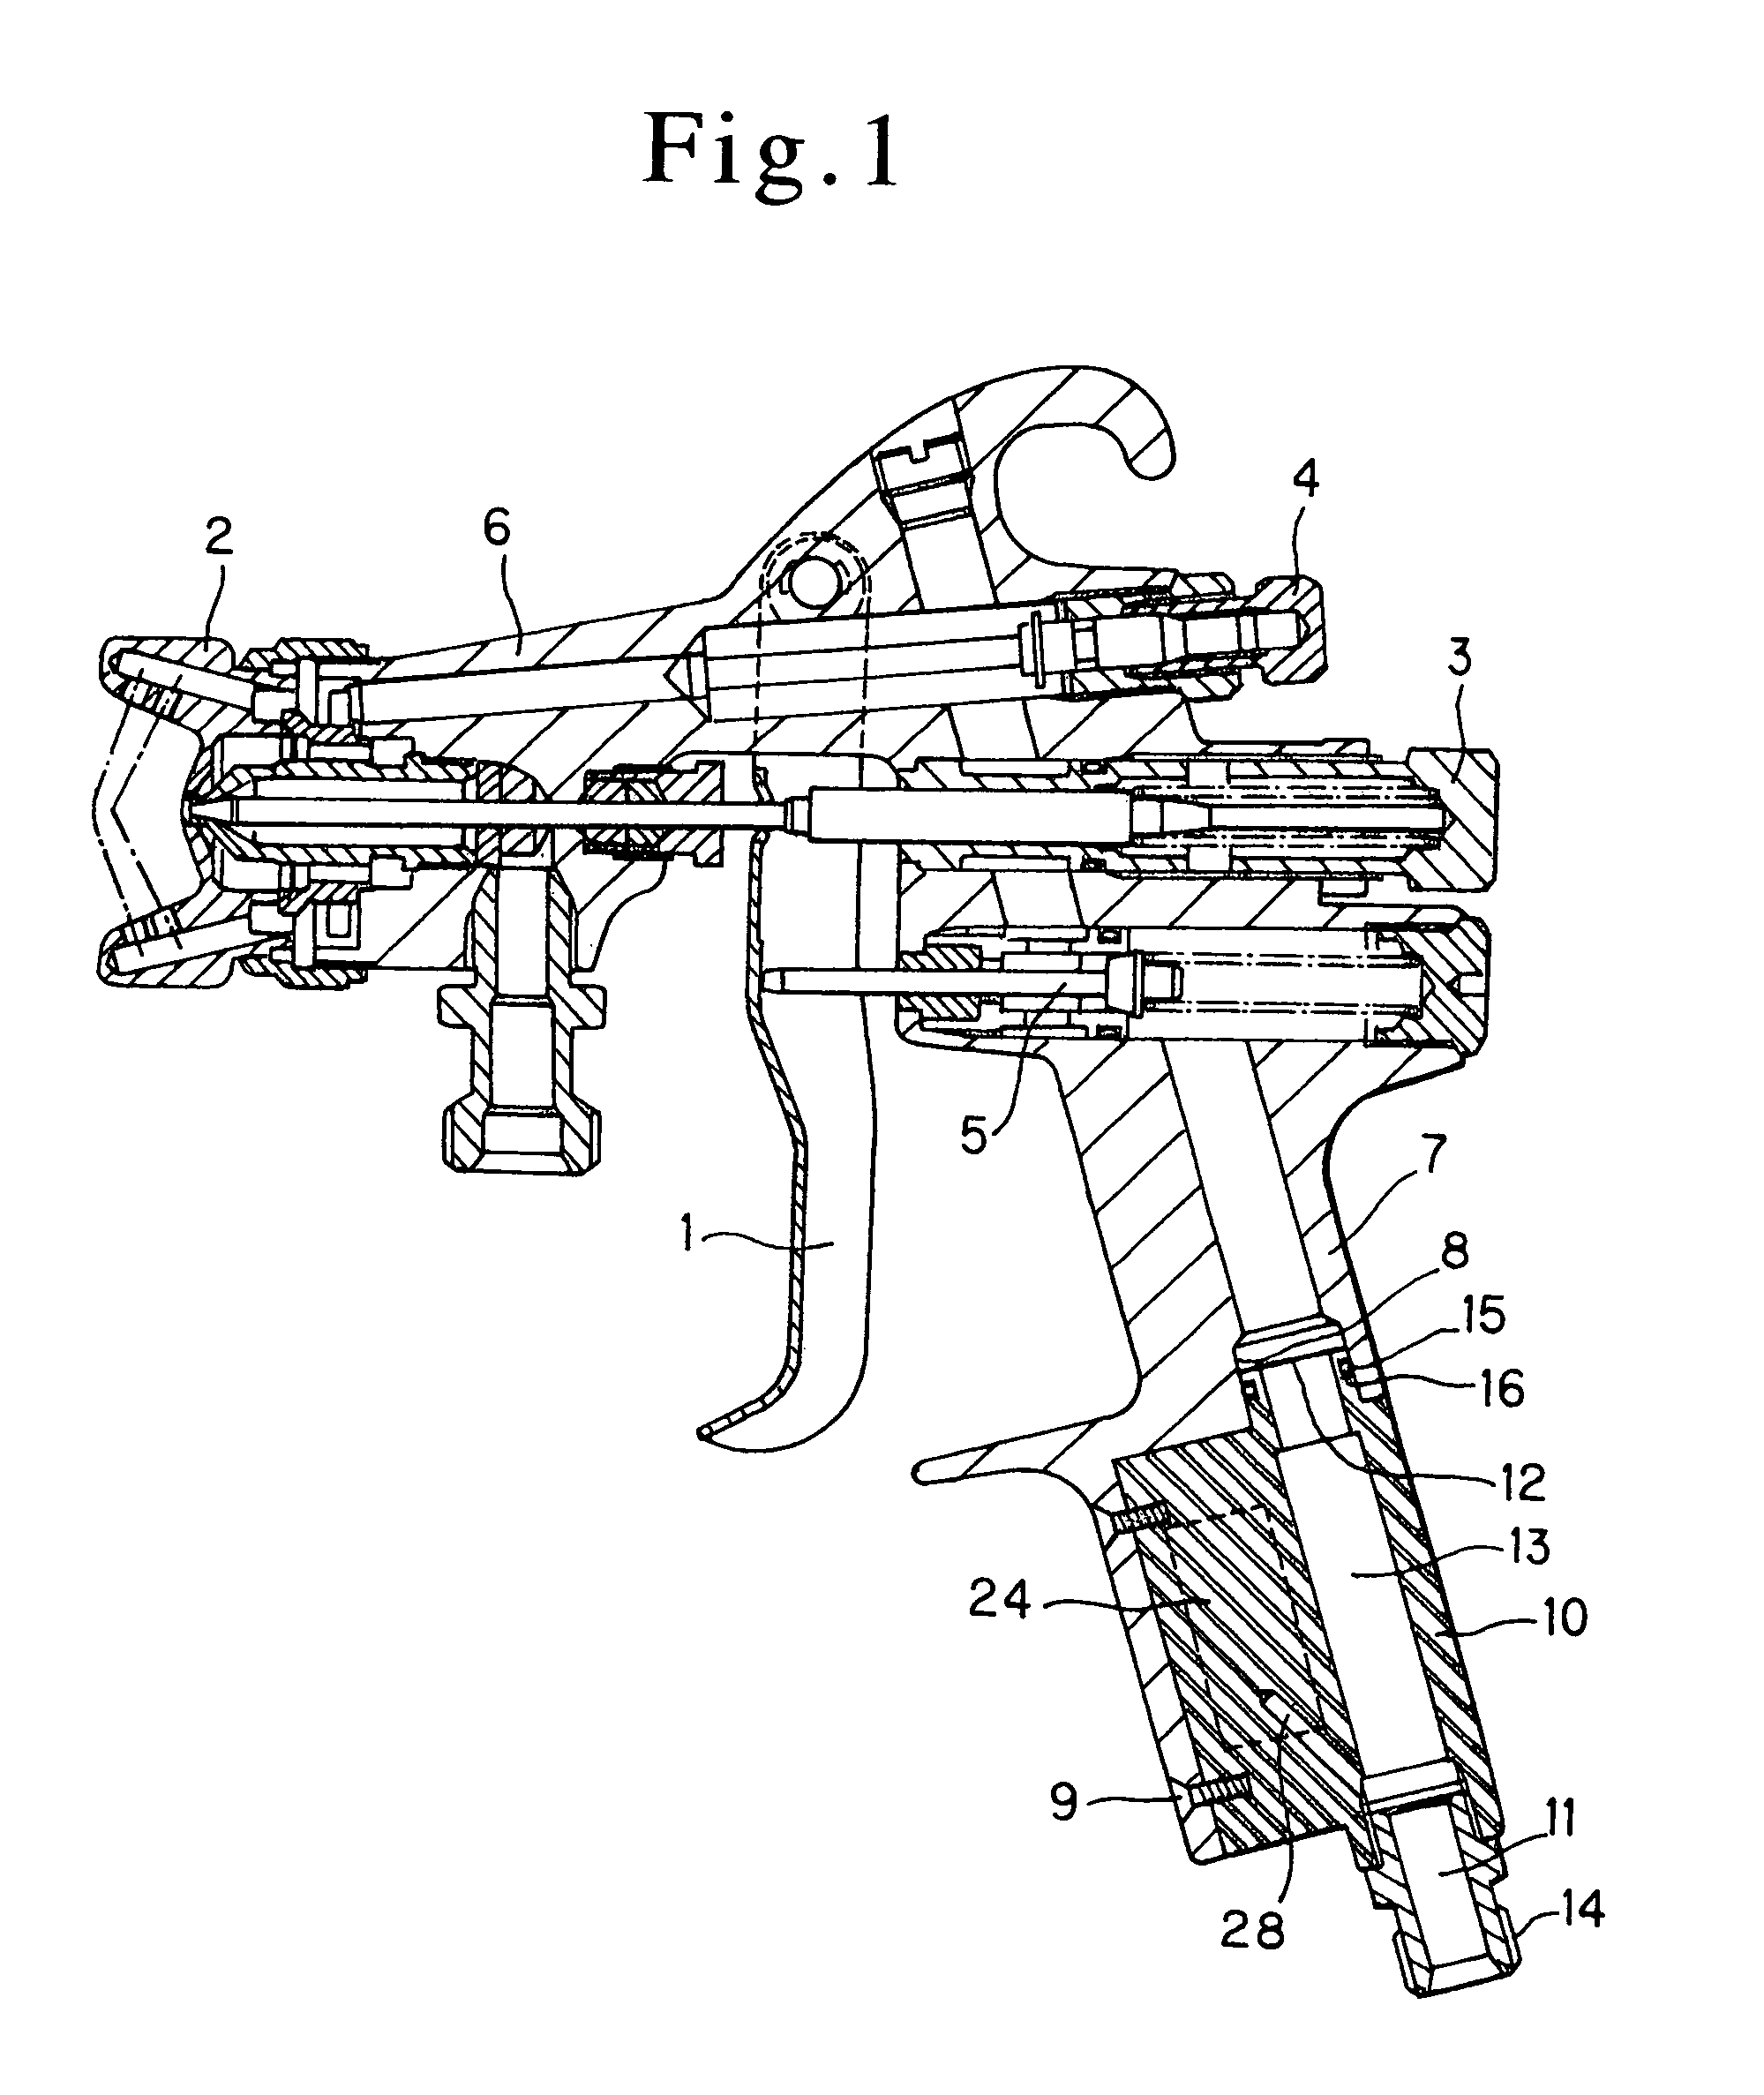 Spray gun with pressure display